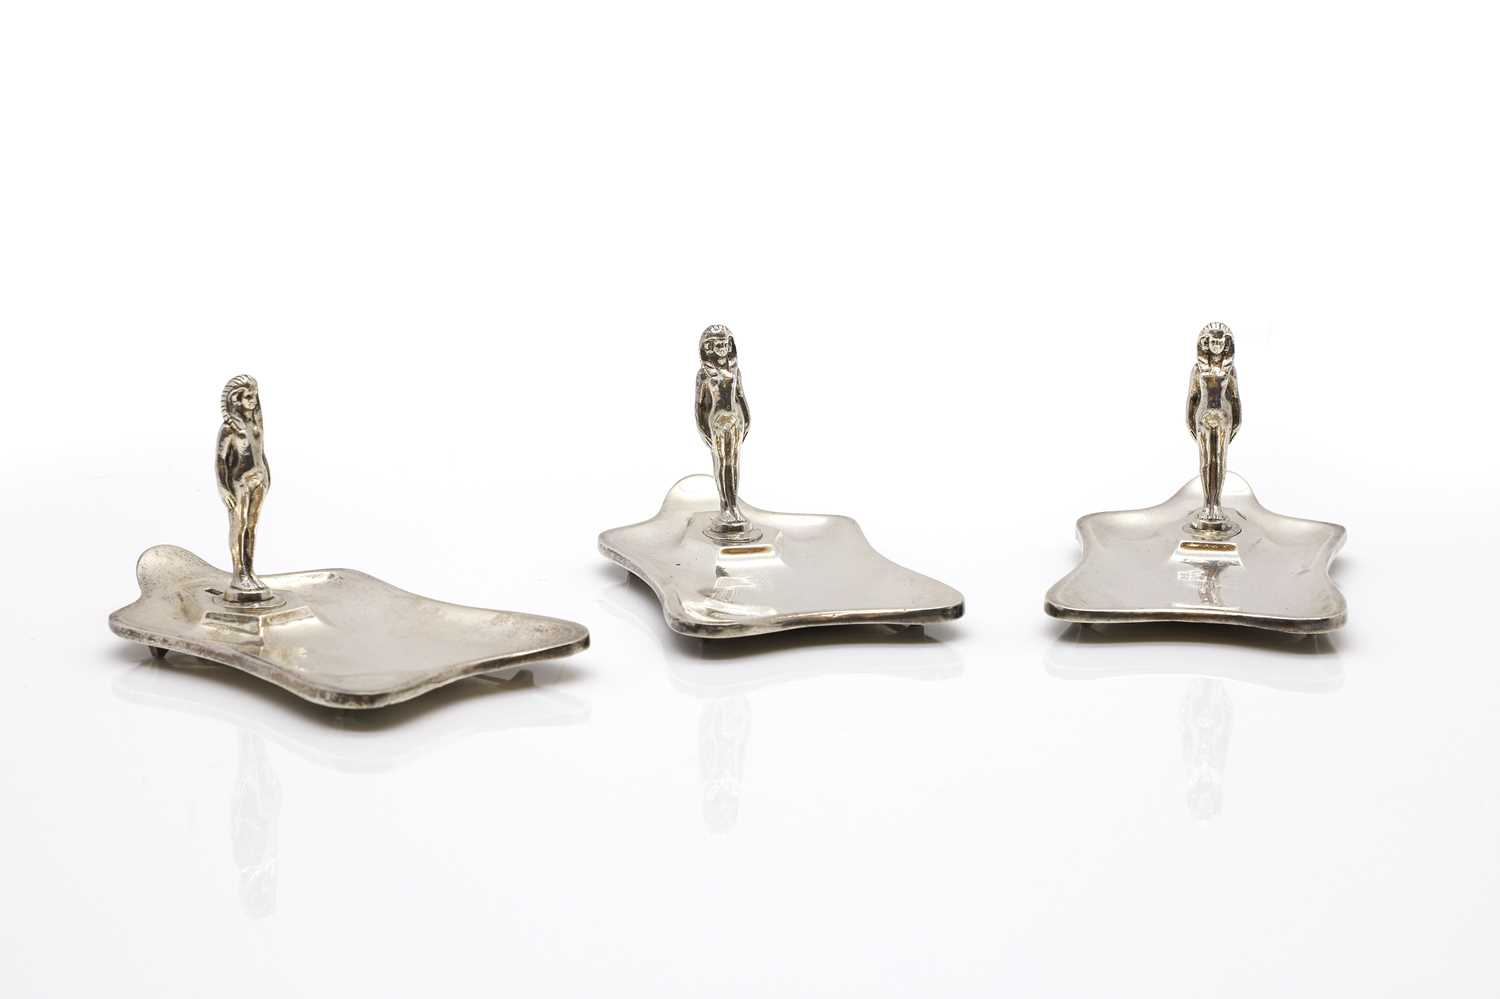 A set of three silver ashtrays